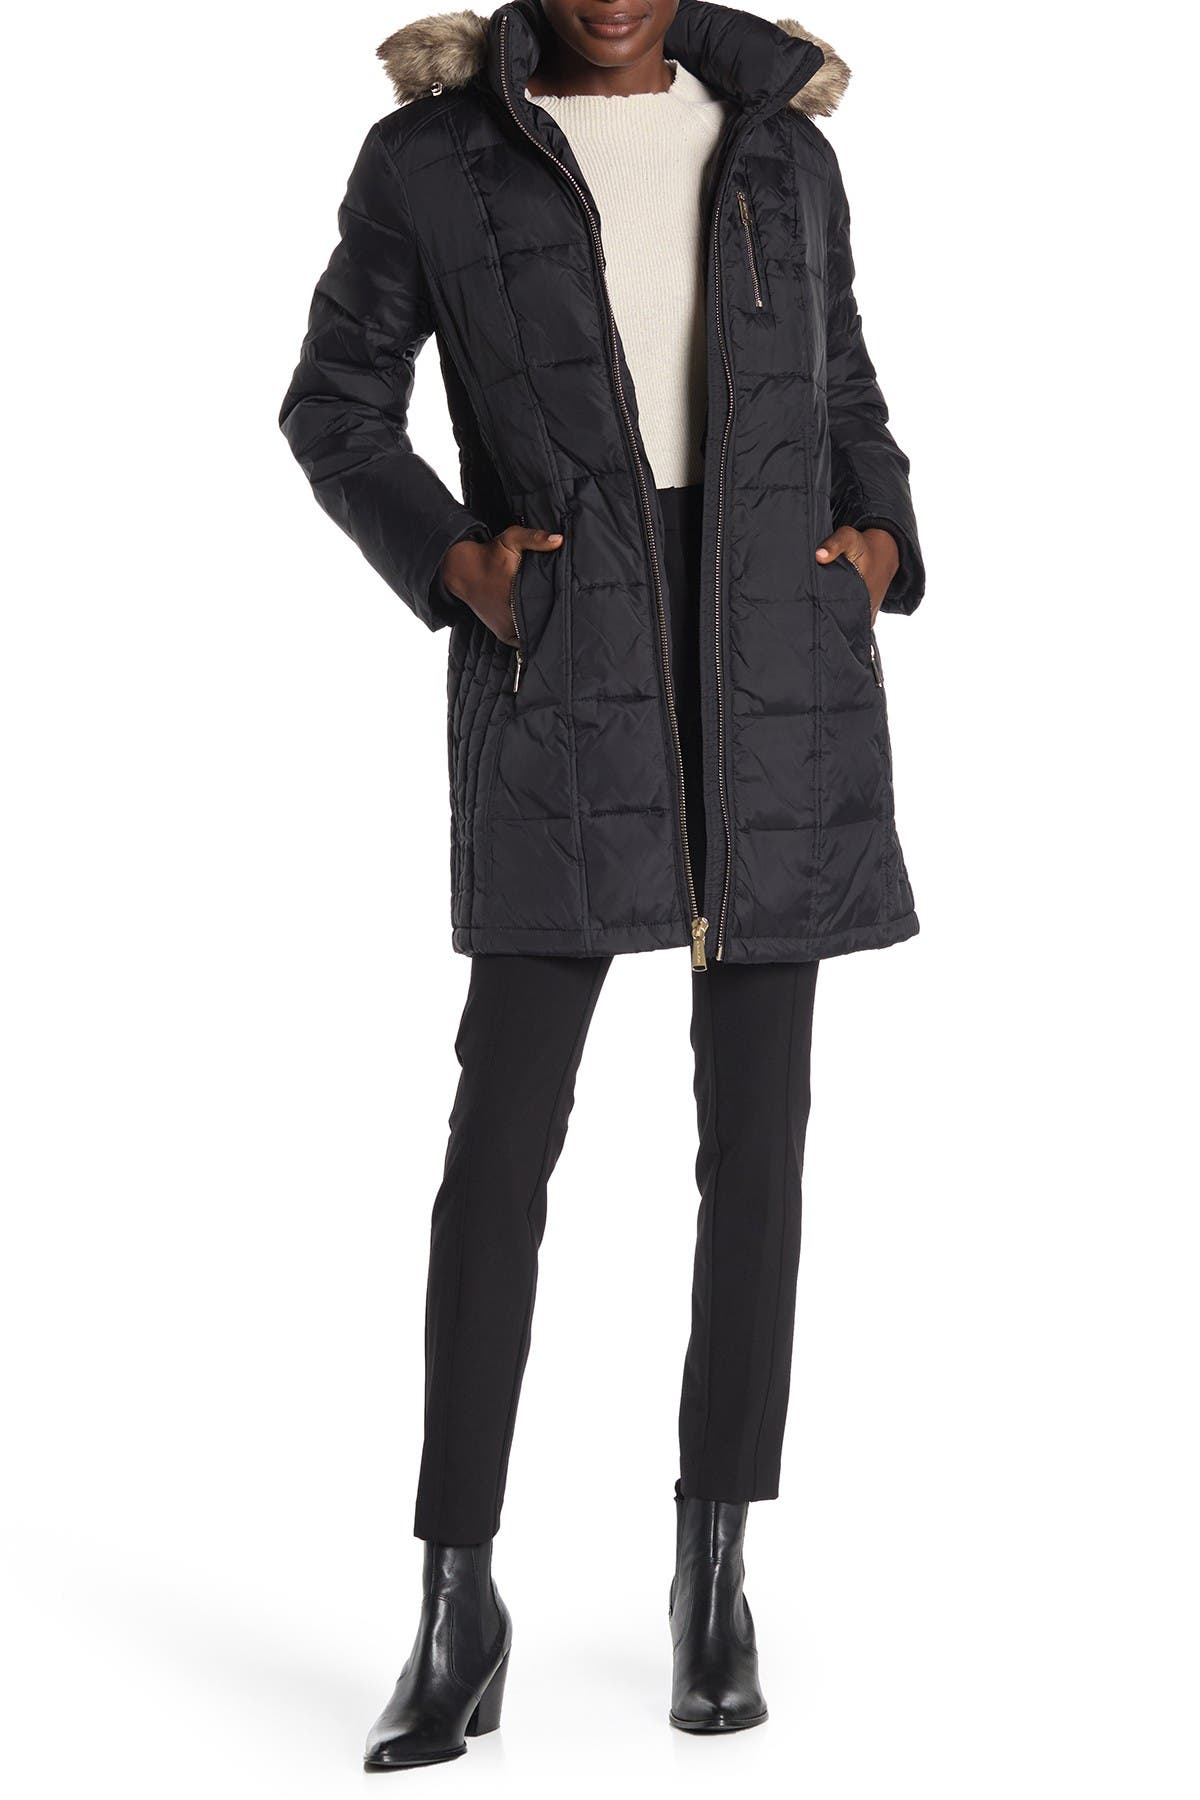 michael kors faux fur hooded puffer coat